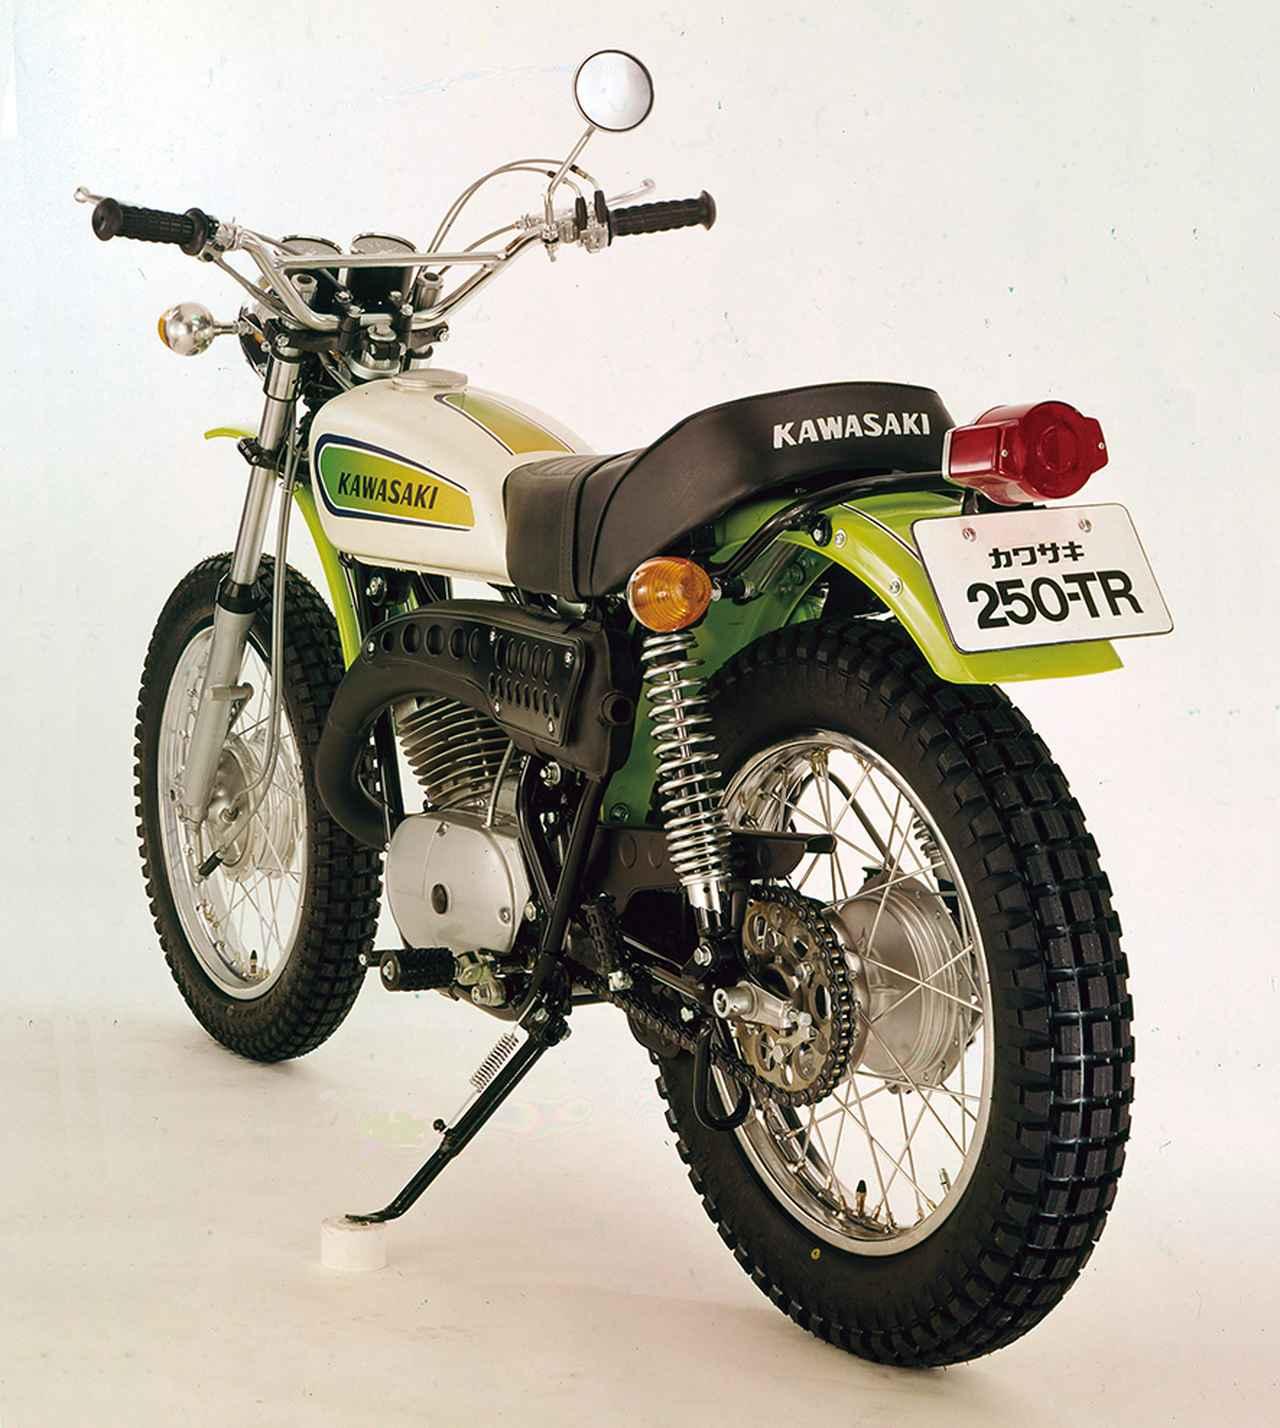 Kawasaki 250tr 49年前に存在した2スト デュアルパーパス 1970 心に残る日本のバイク遺産 2サイクル250cc史 編 Webオートバイ の写真 4ページ目 自動車情報サイト 新車 中古車 Carview